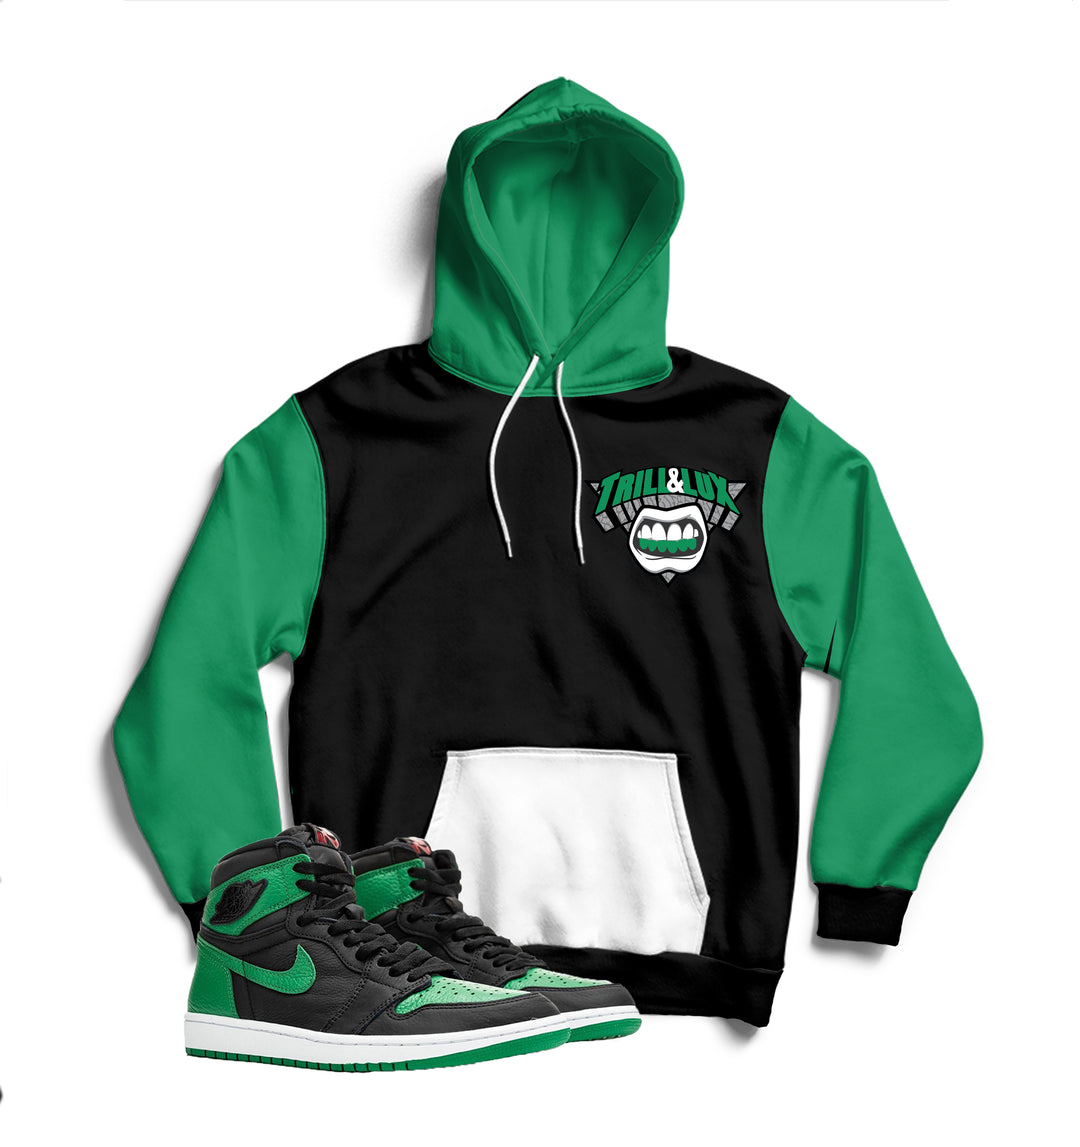 Trill & Lux | Jordan 1 Pine Green  Inspired Hoodie | Retro Jordan 1